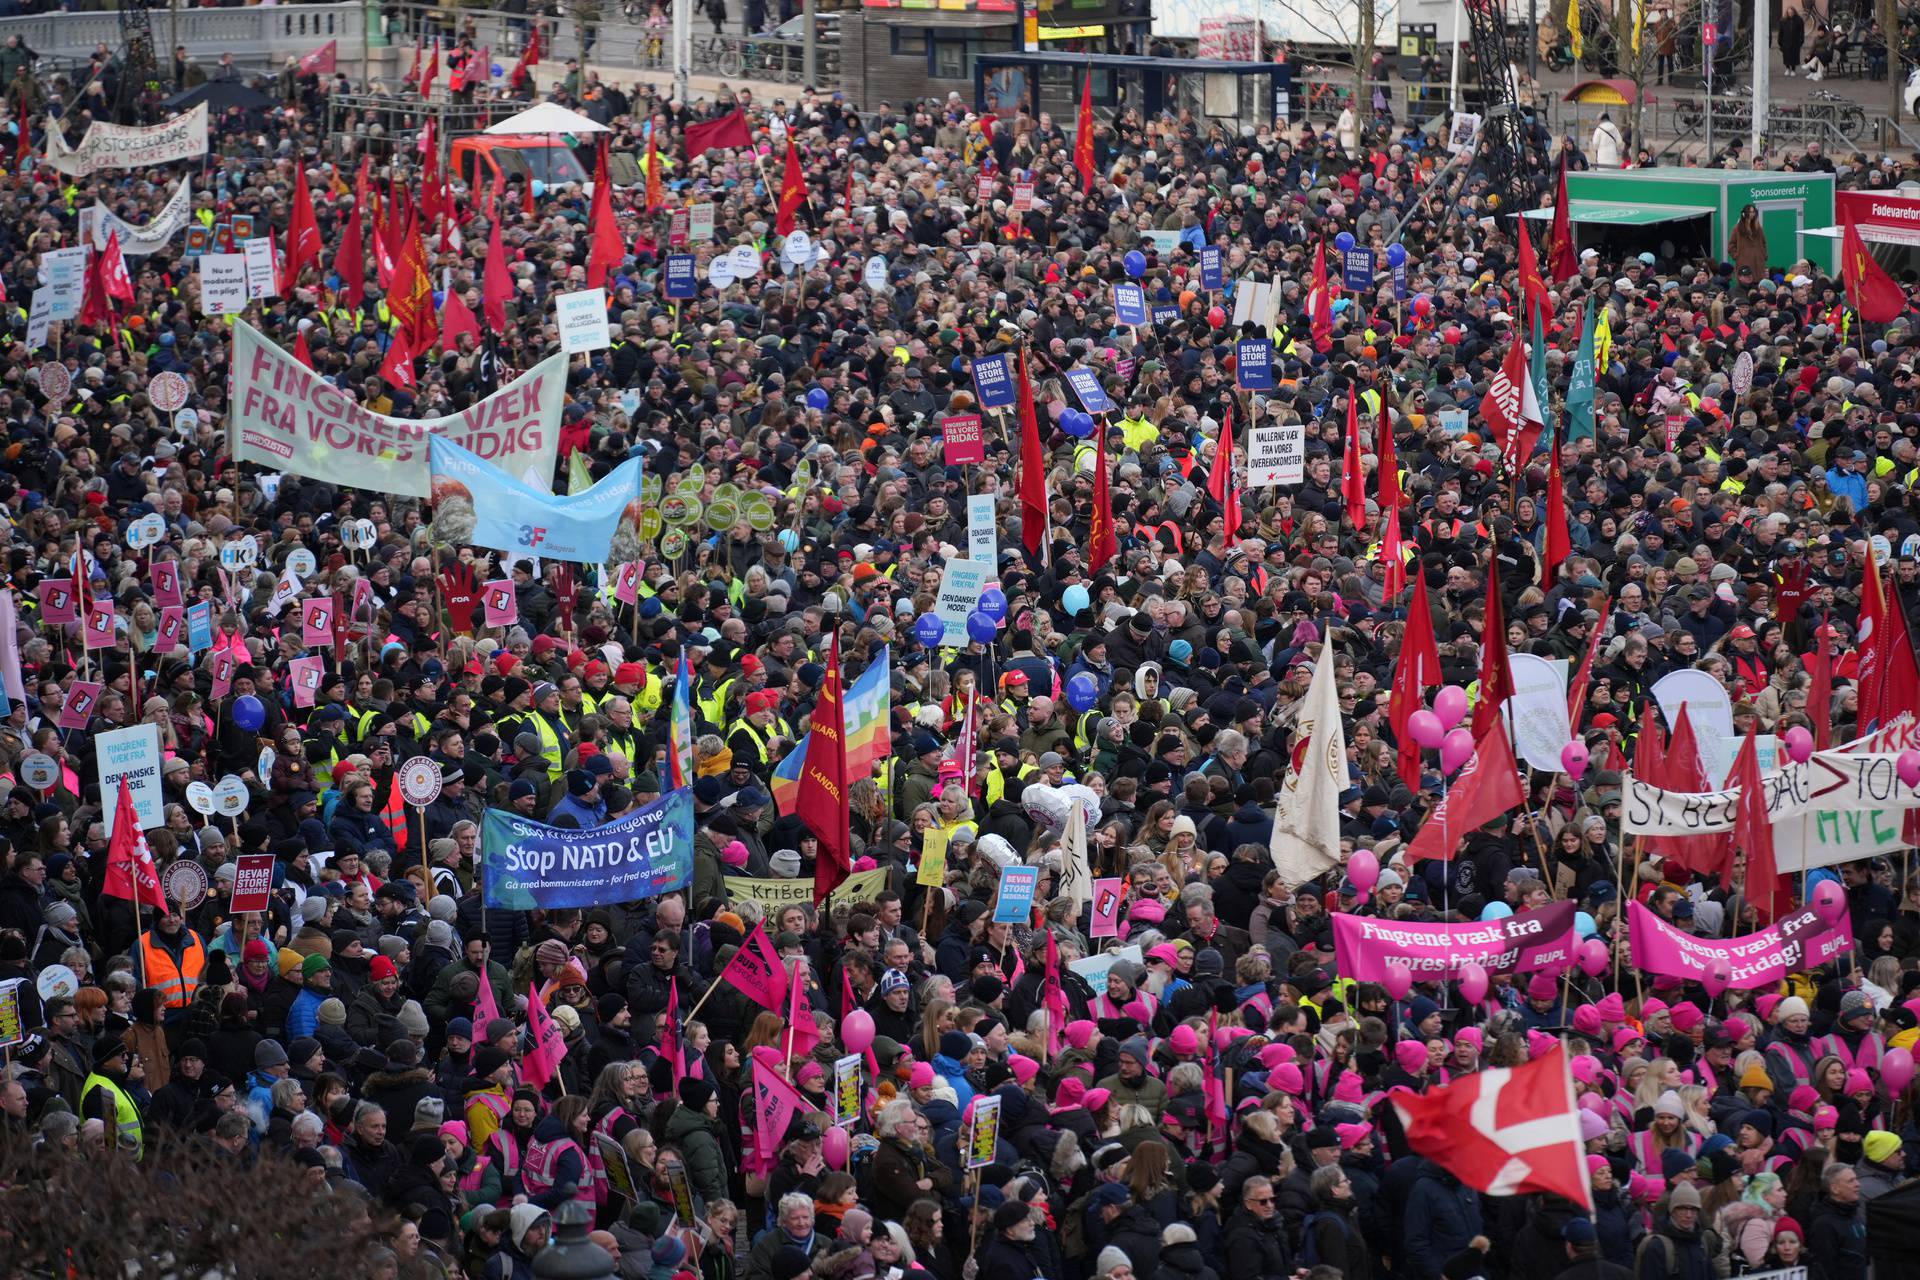 Protest in front of the Danish Parliament in Copenhagen